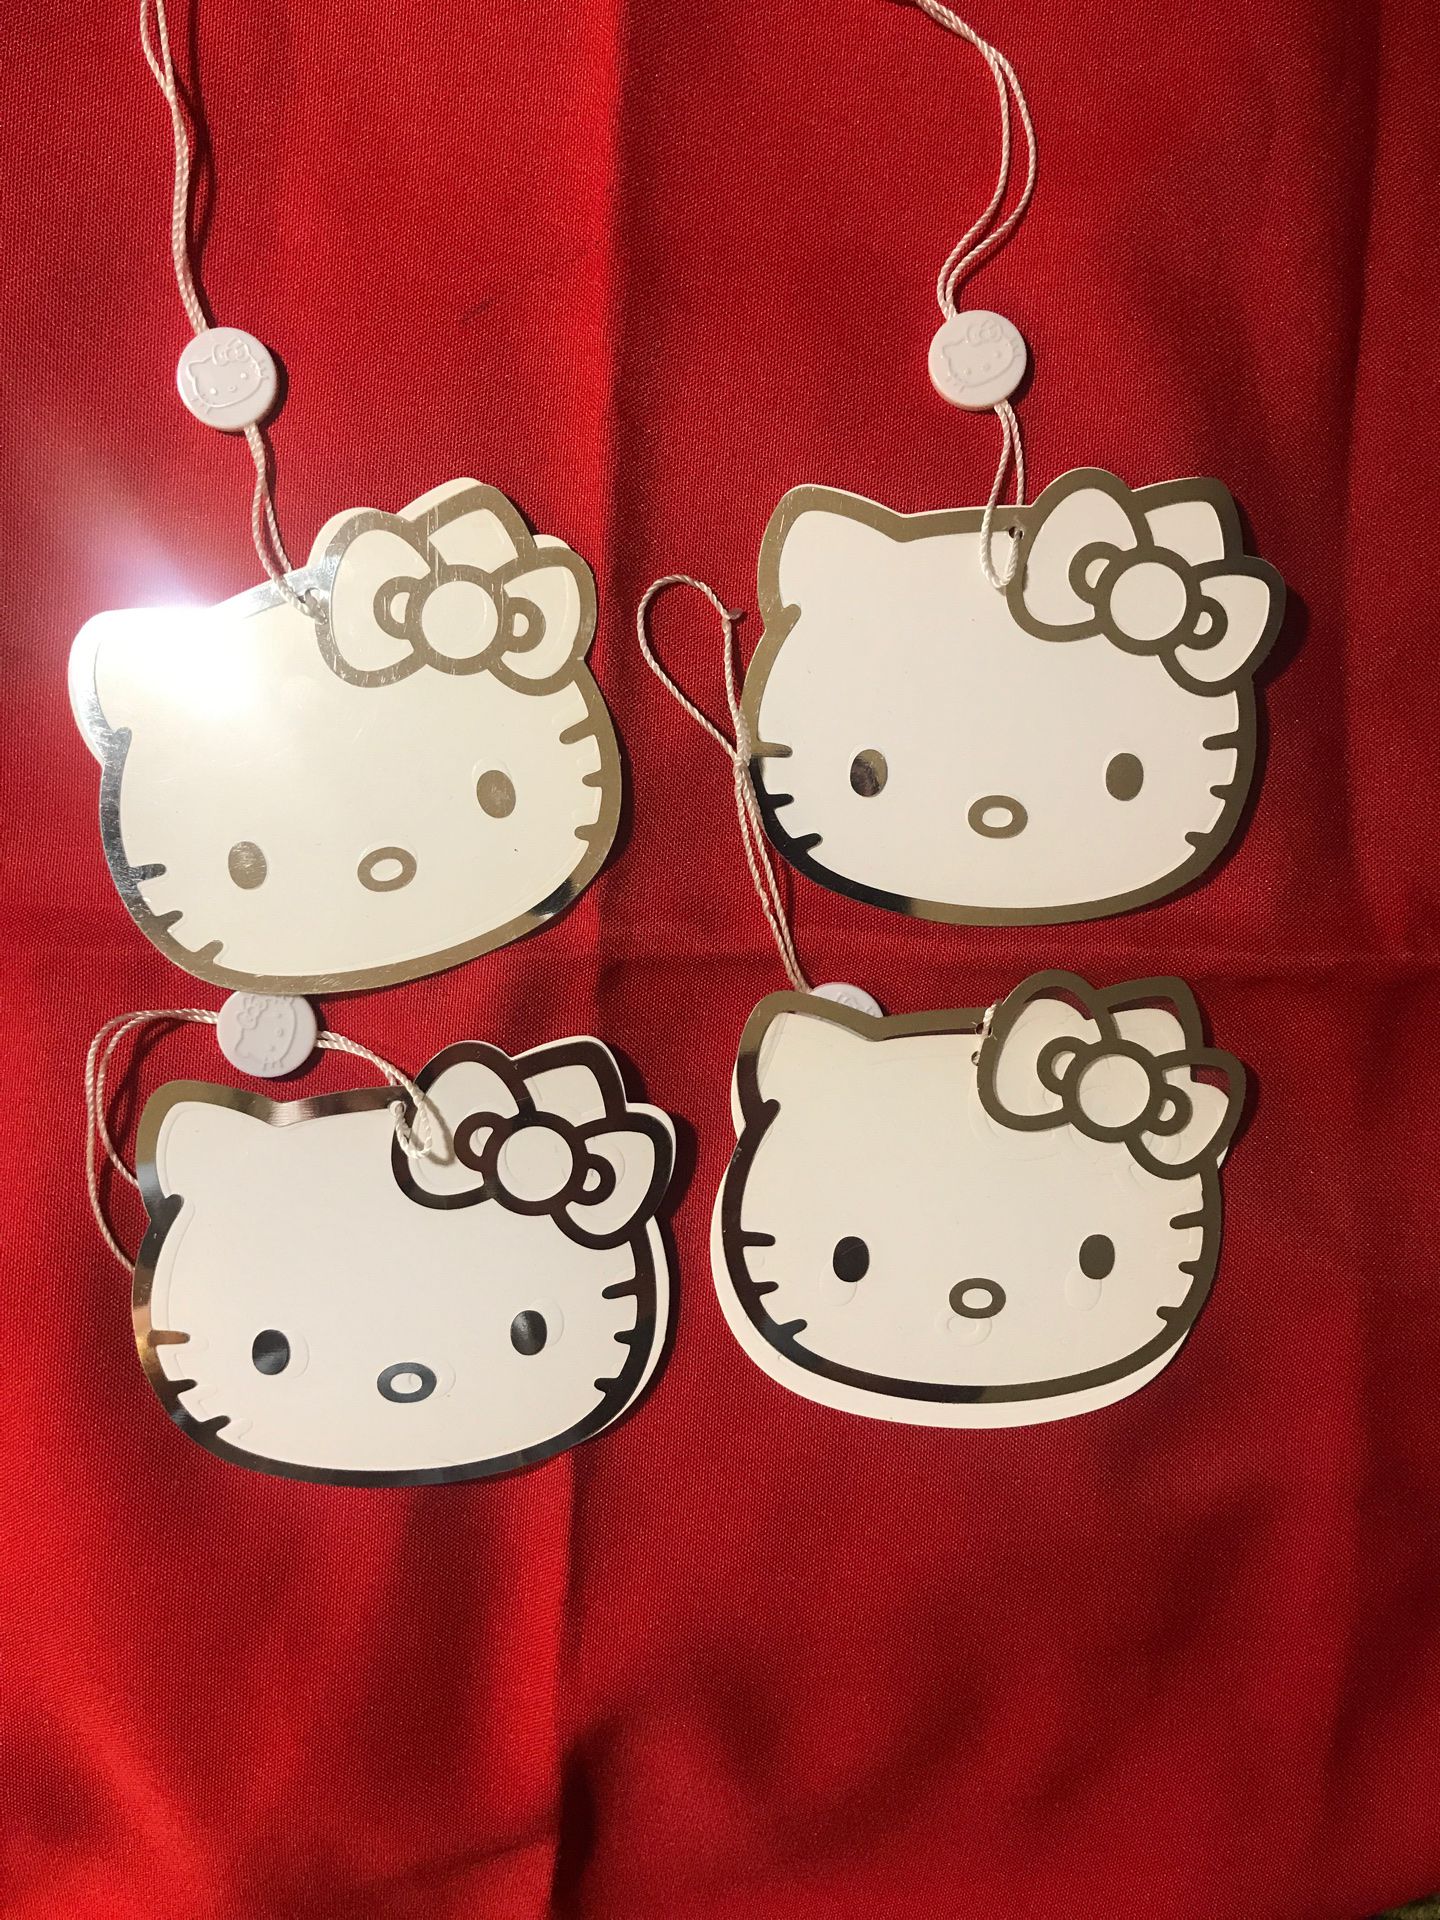 Hello Kitty (Sanrio) Face Gift Tags 🏷 (4 pieces)